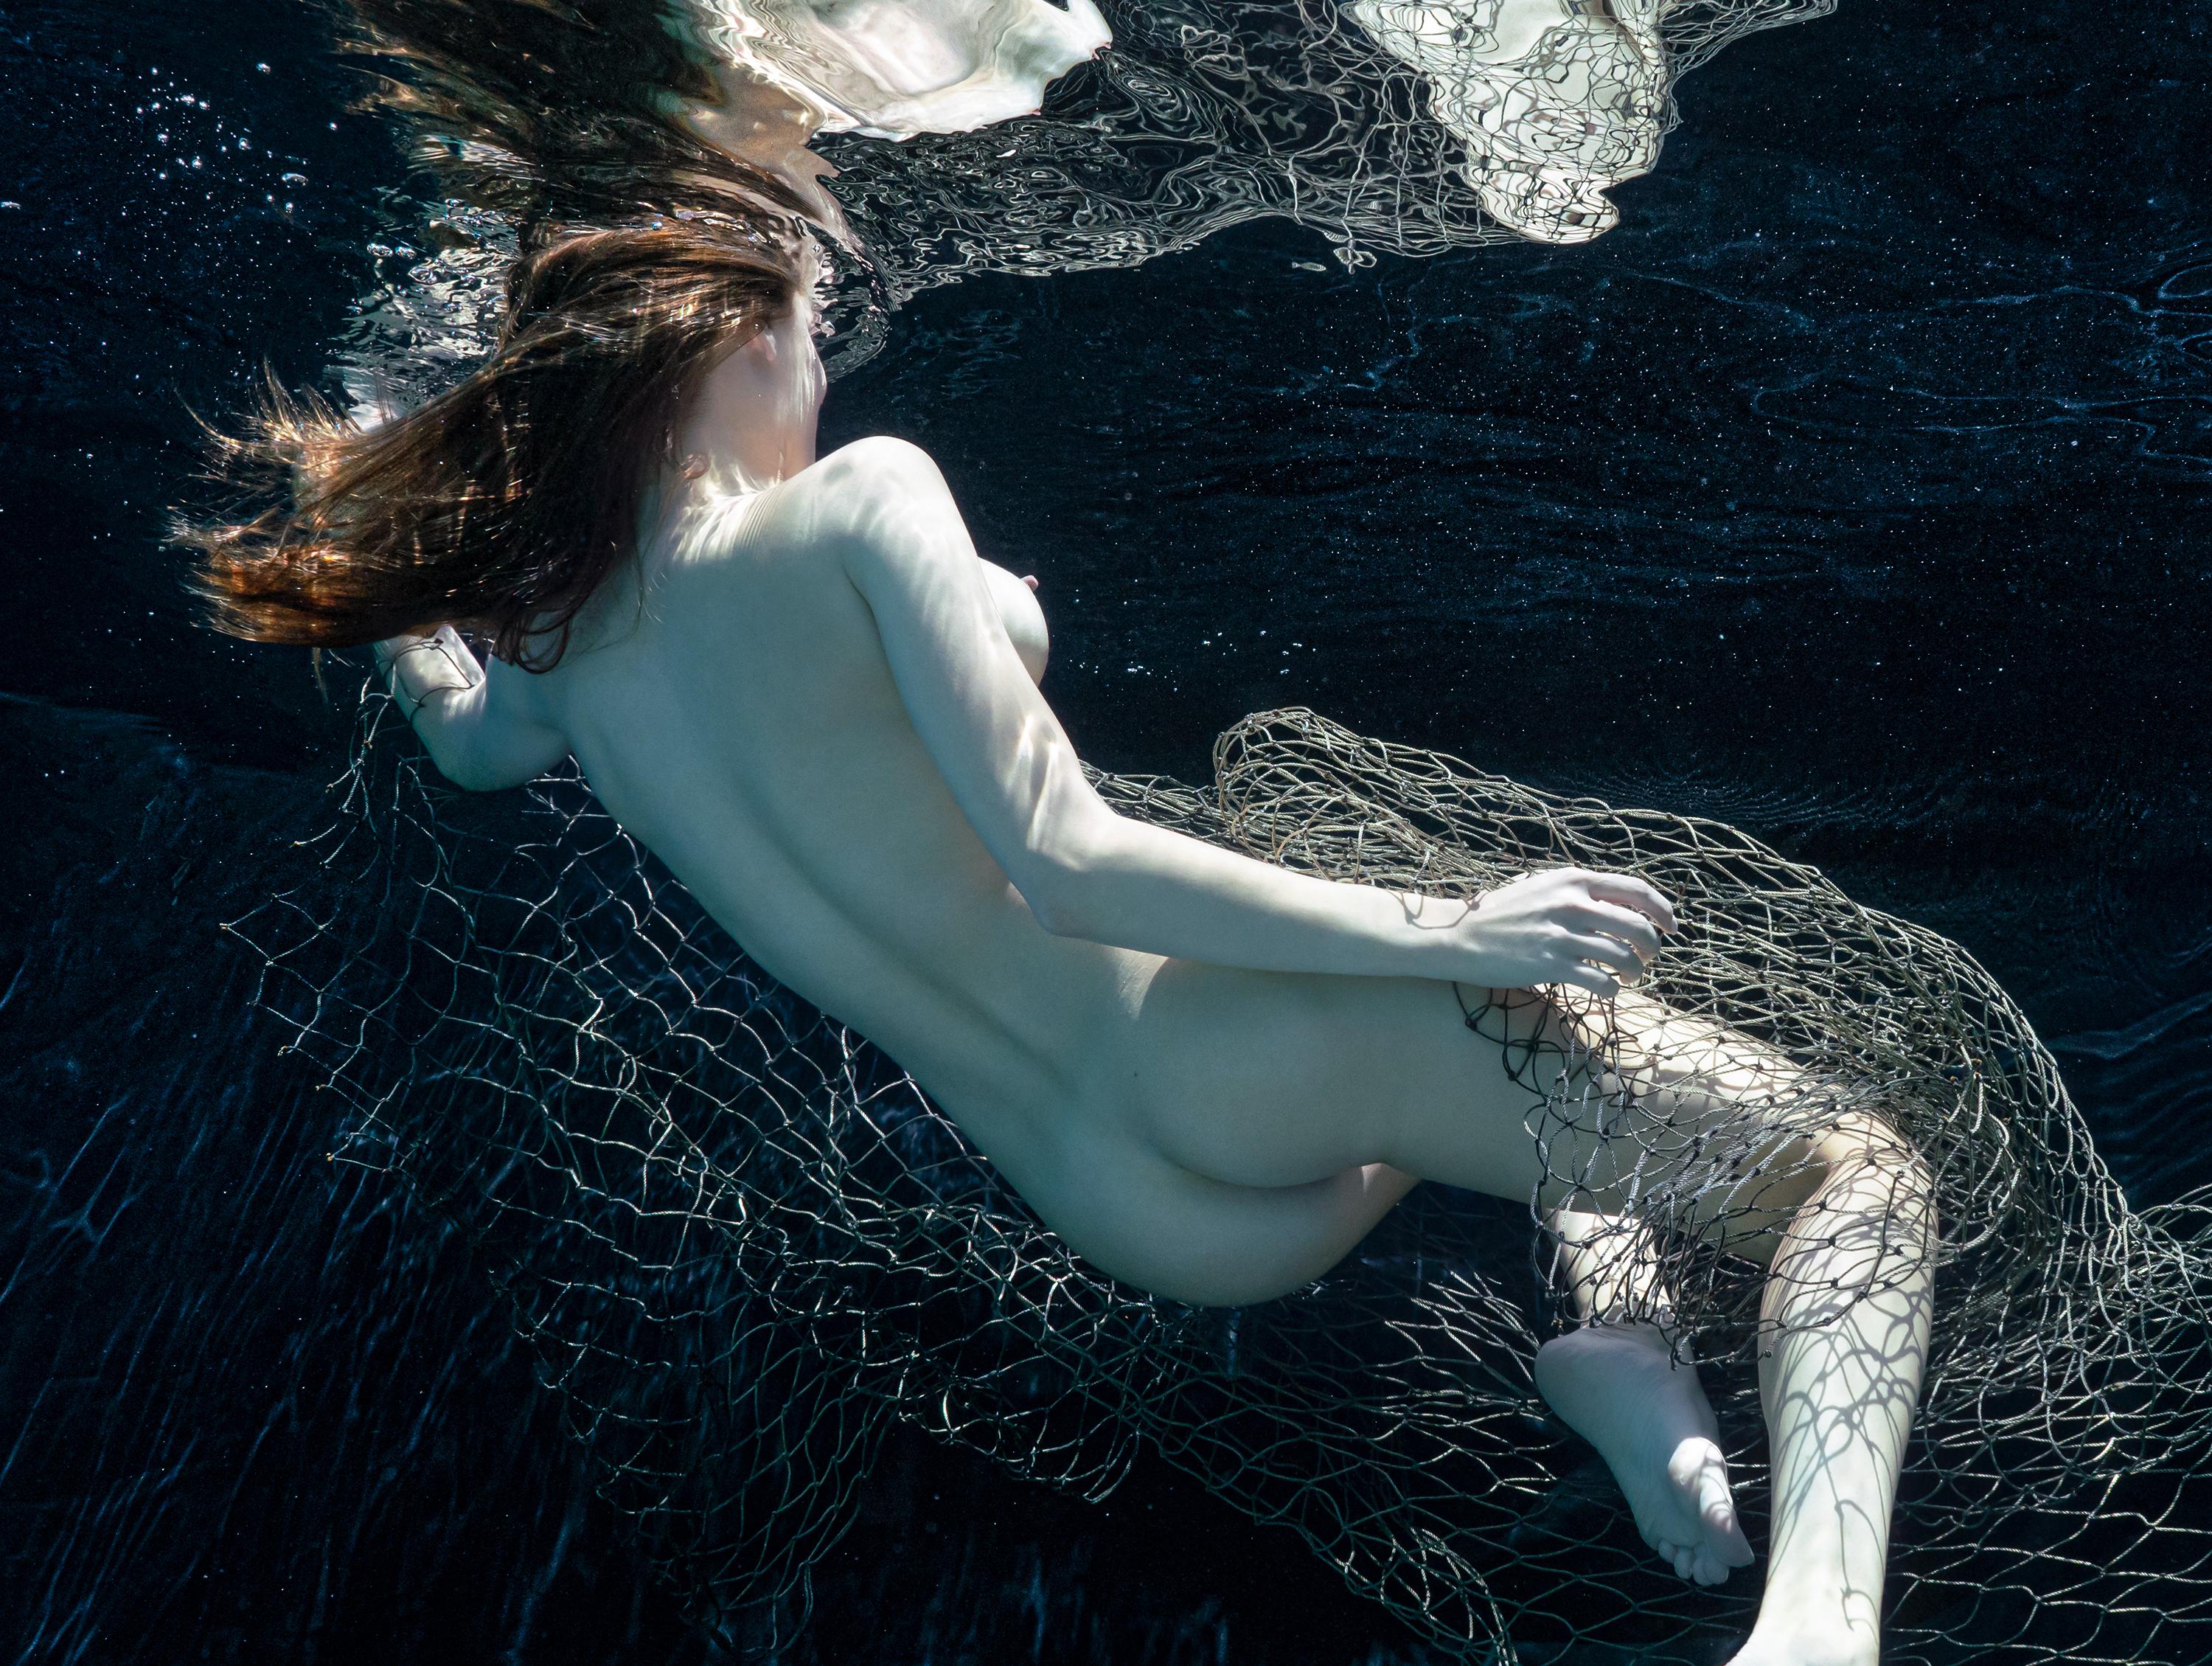 Constellation - underwater nude photograph - archival pigment print 16x24